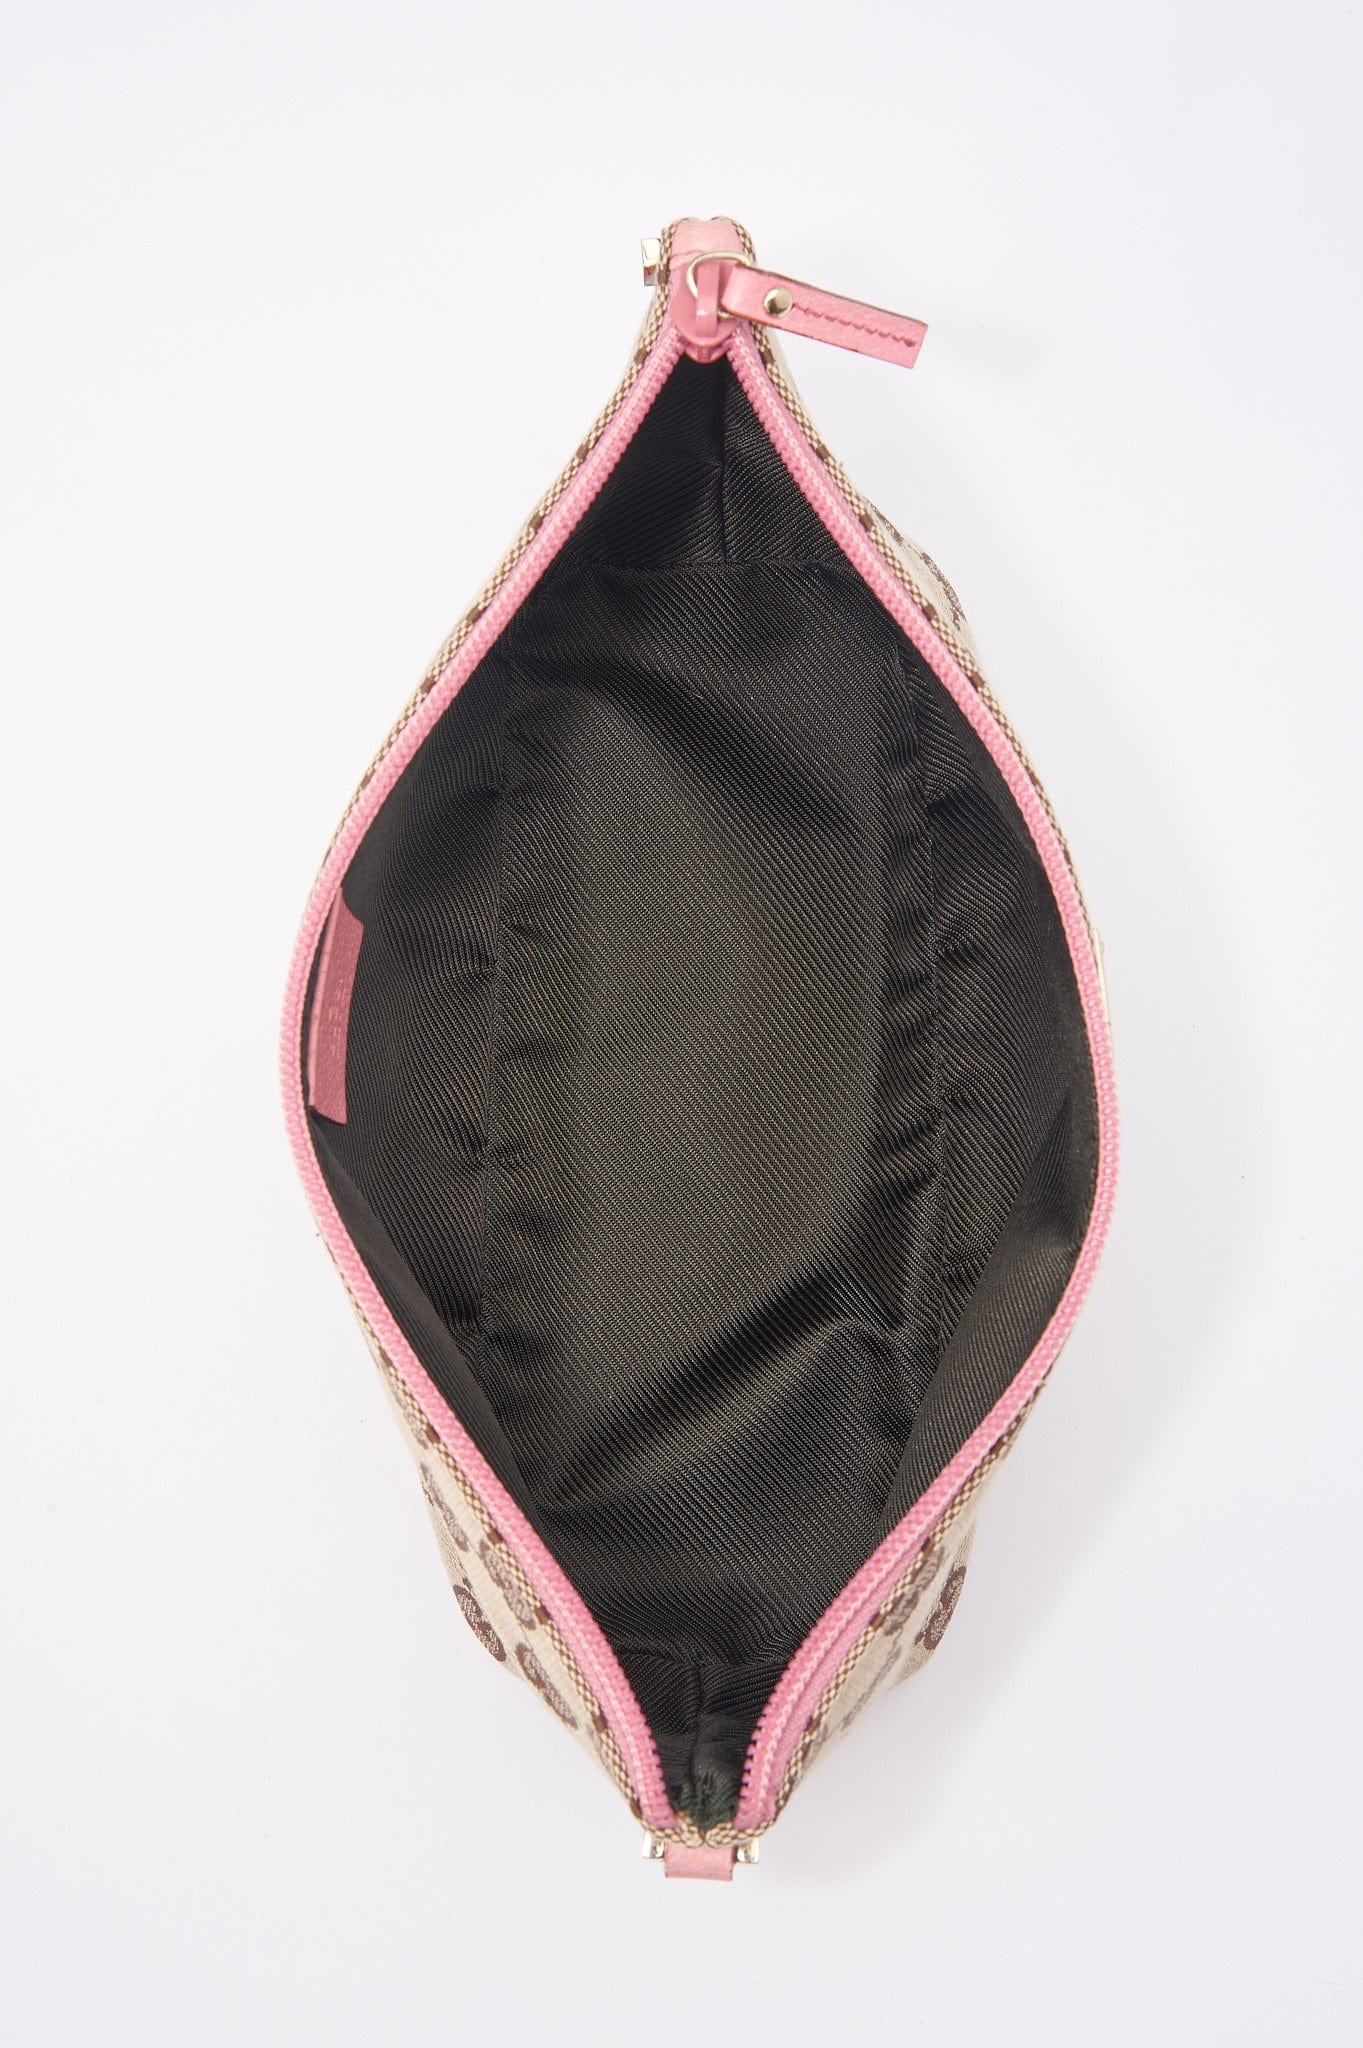 Vintage Gucci Boat Pochette Bag with Pink Leather Trim